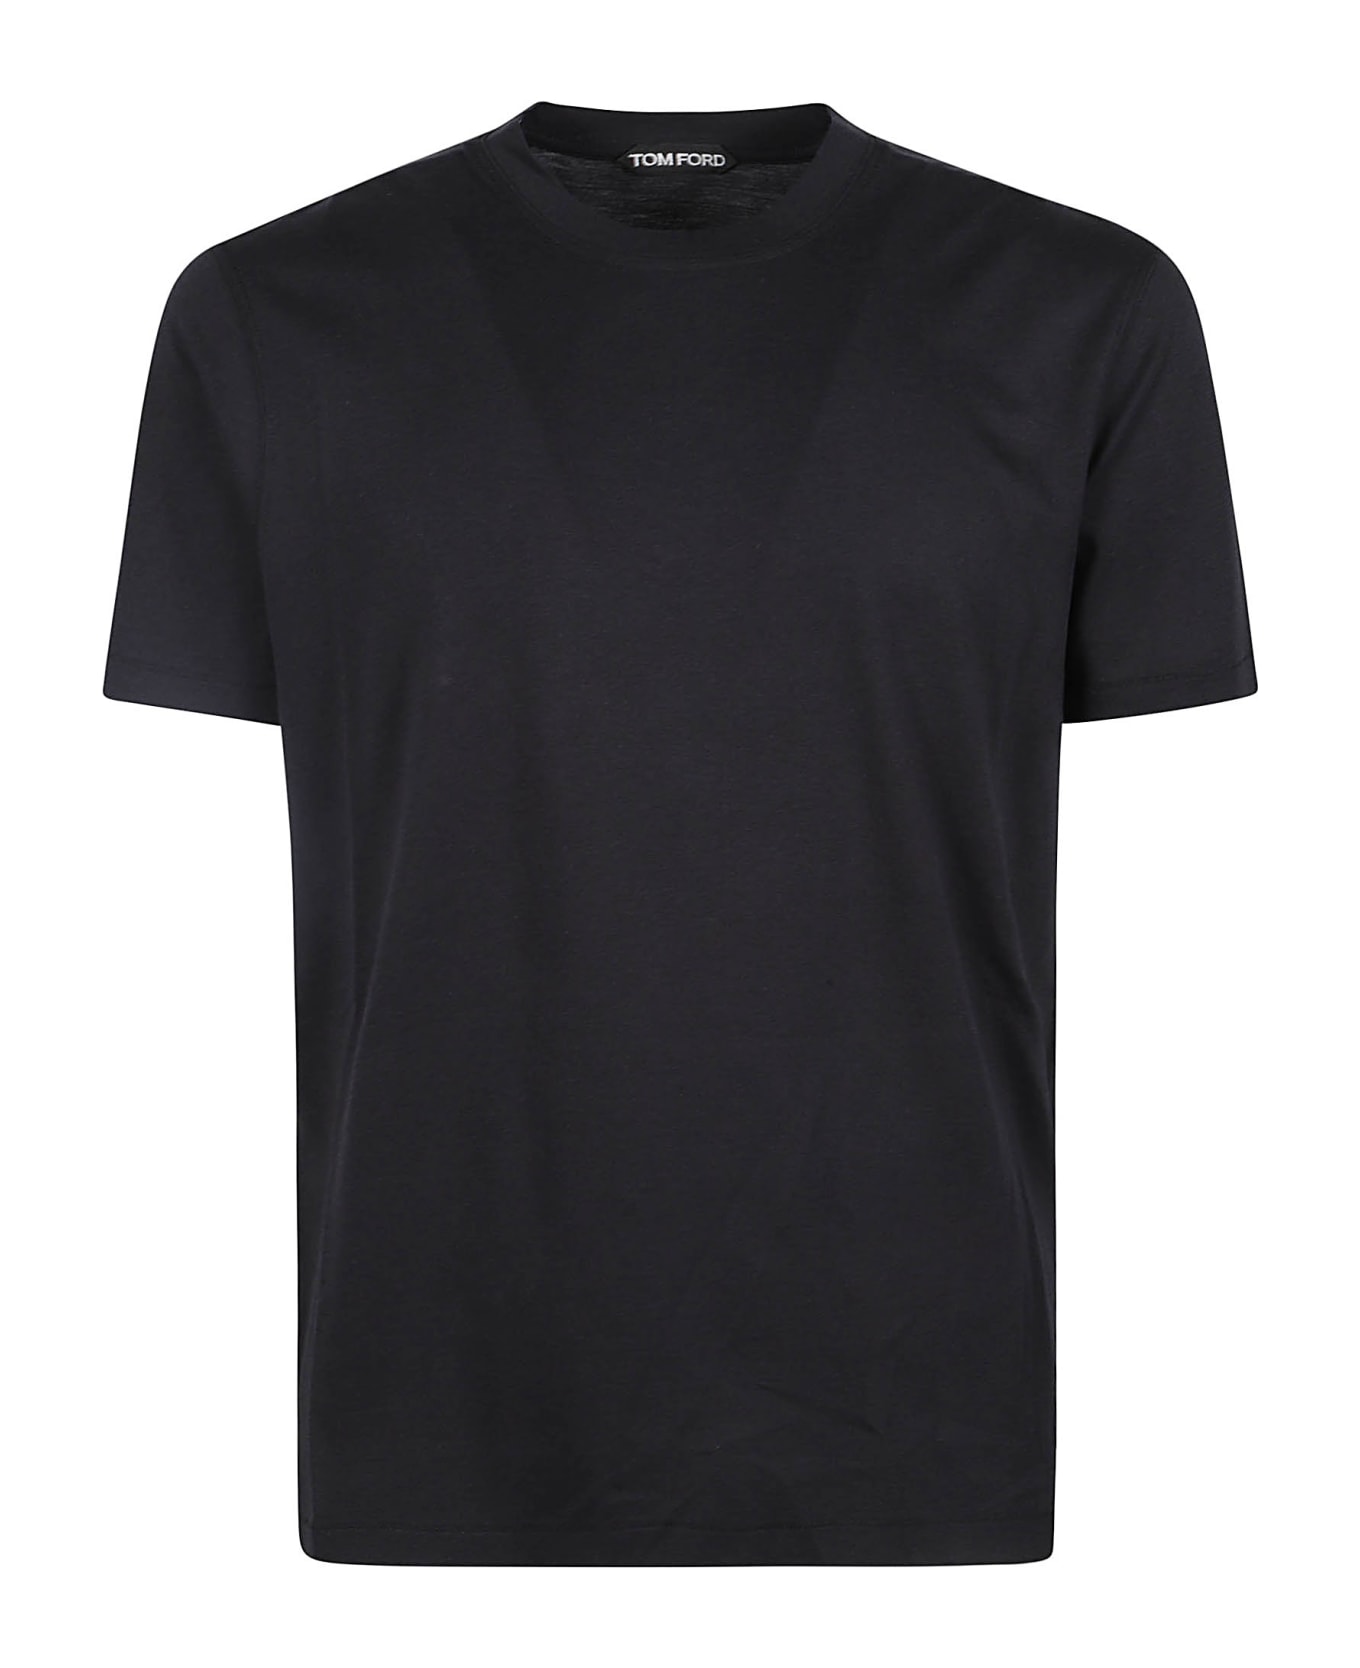 Tom Ford Round Neck Plain T-shirt - Black